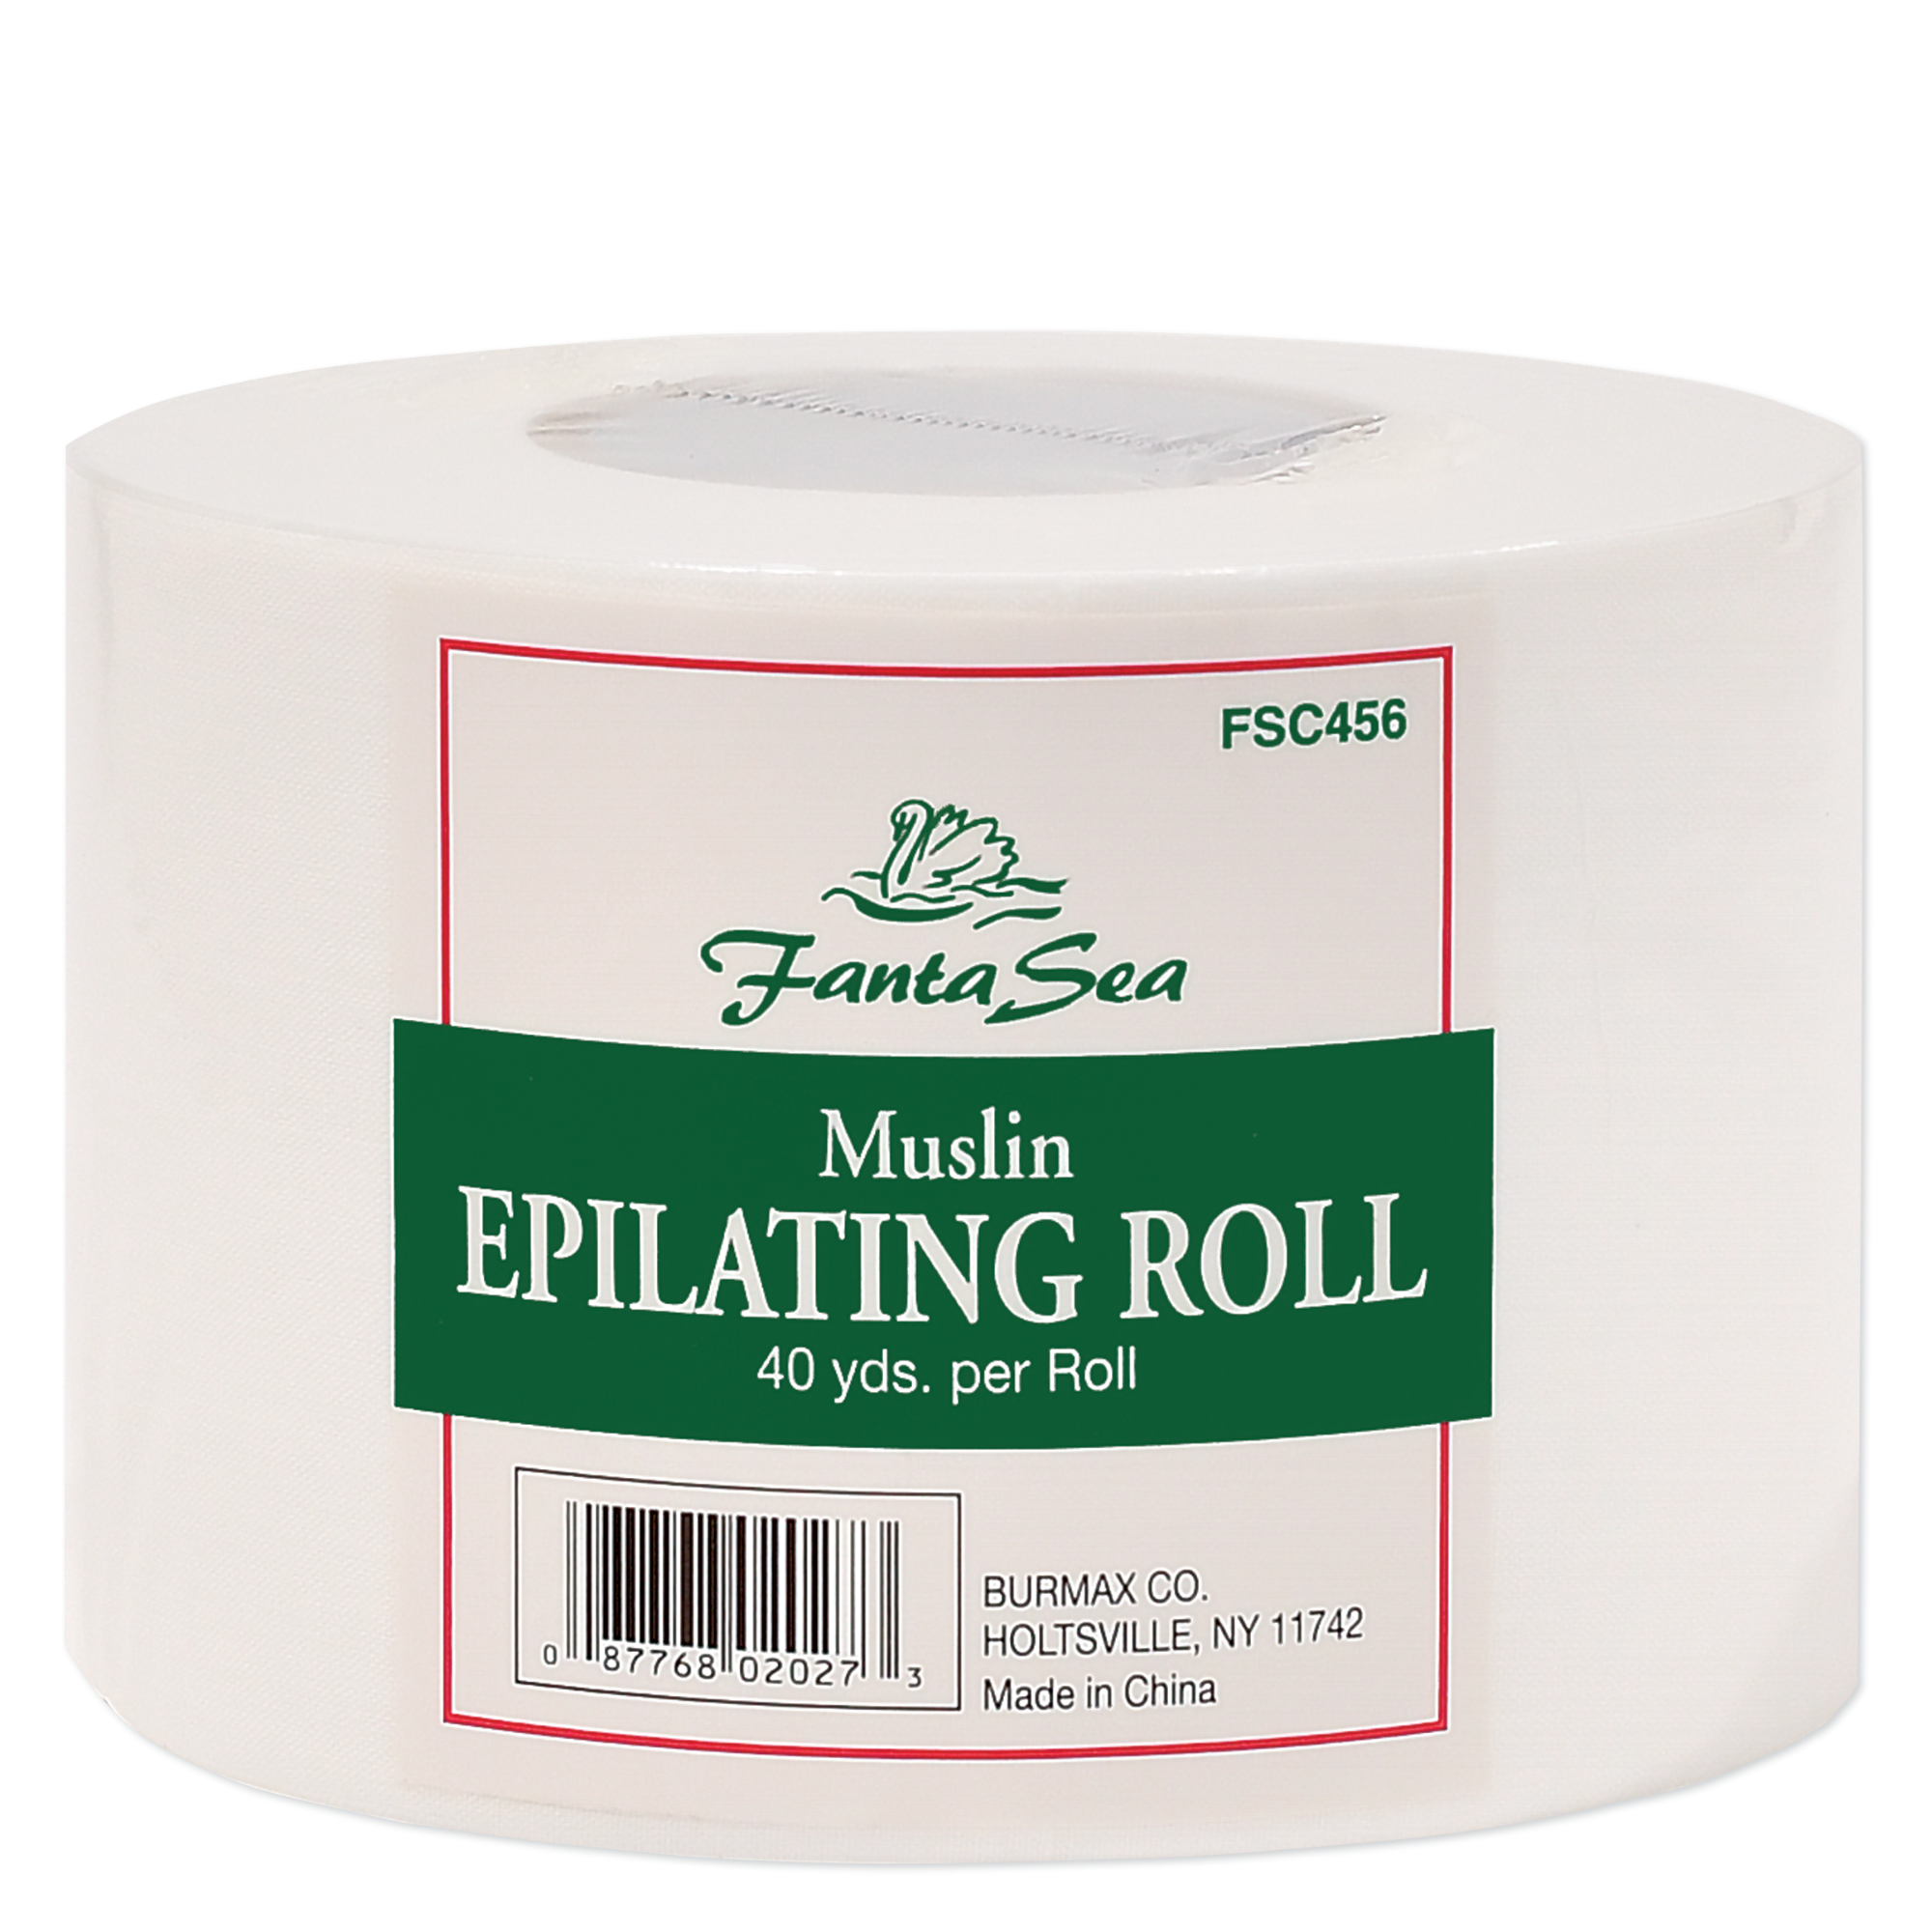 Muslin Epilating Roll - 40 yards